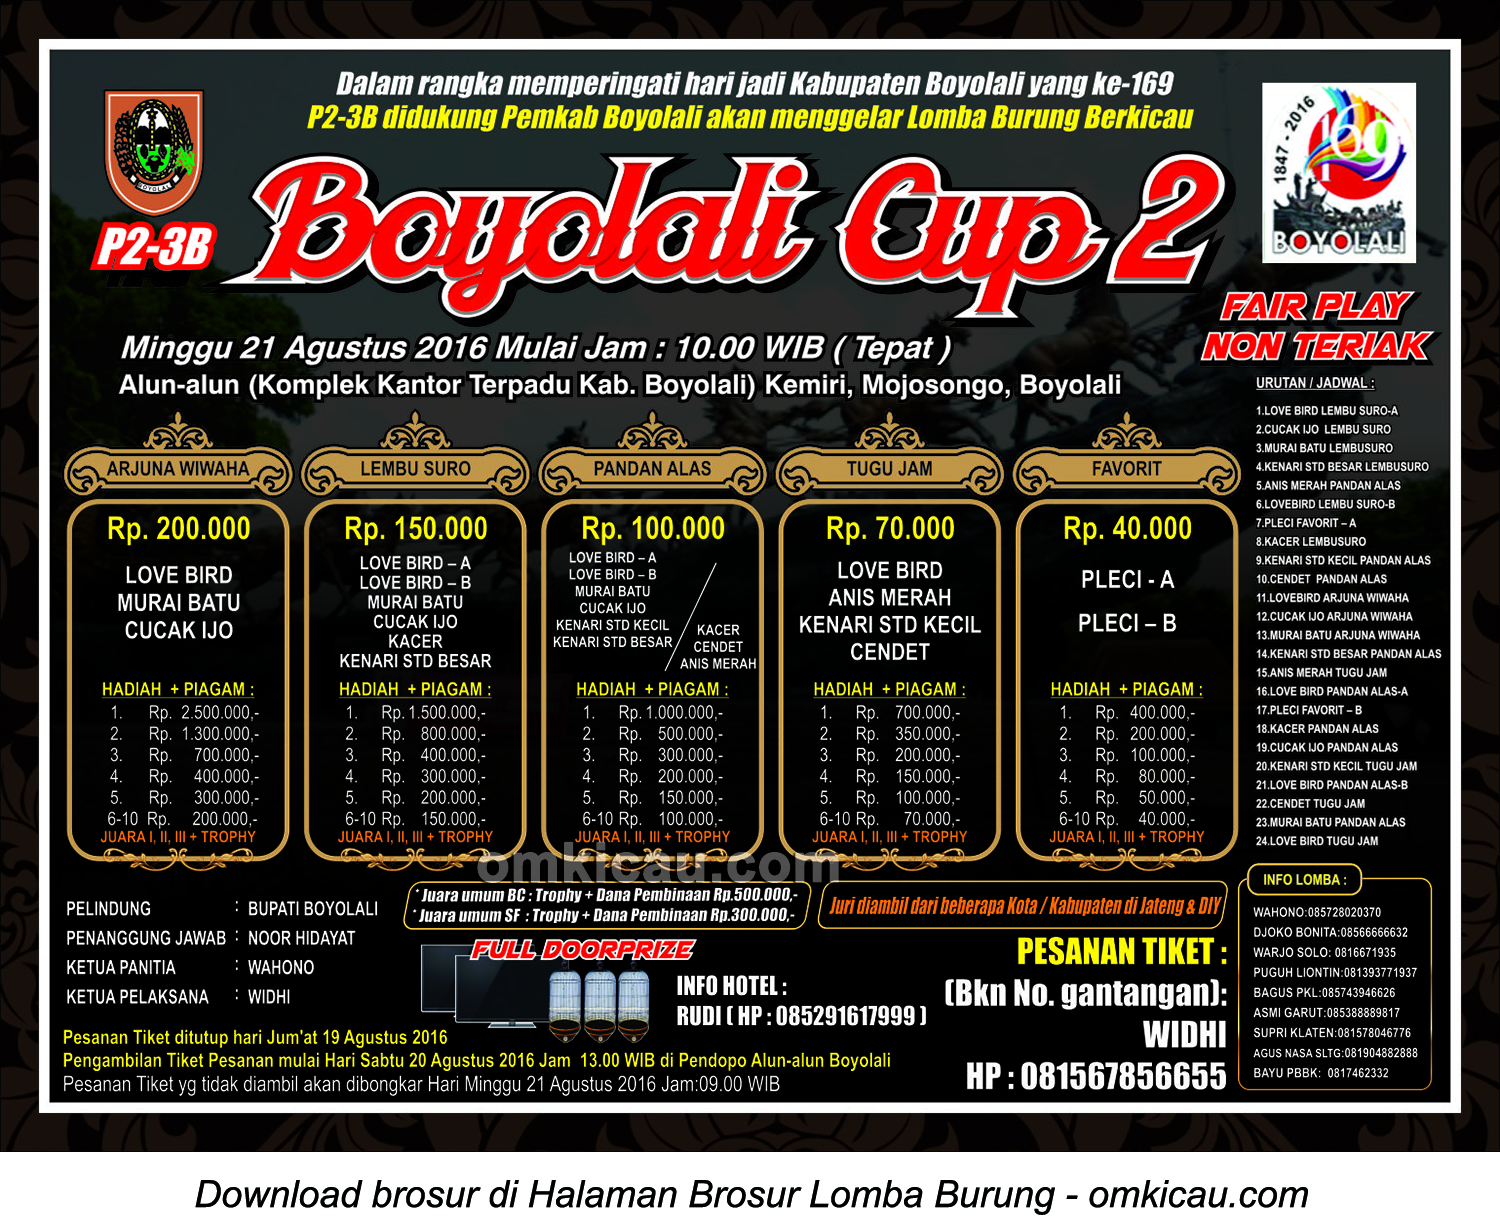 Brosur Lomba Burung Berkicau Boyolali Cup 2, Boyolali, 21 Agustus 2016